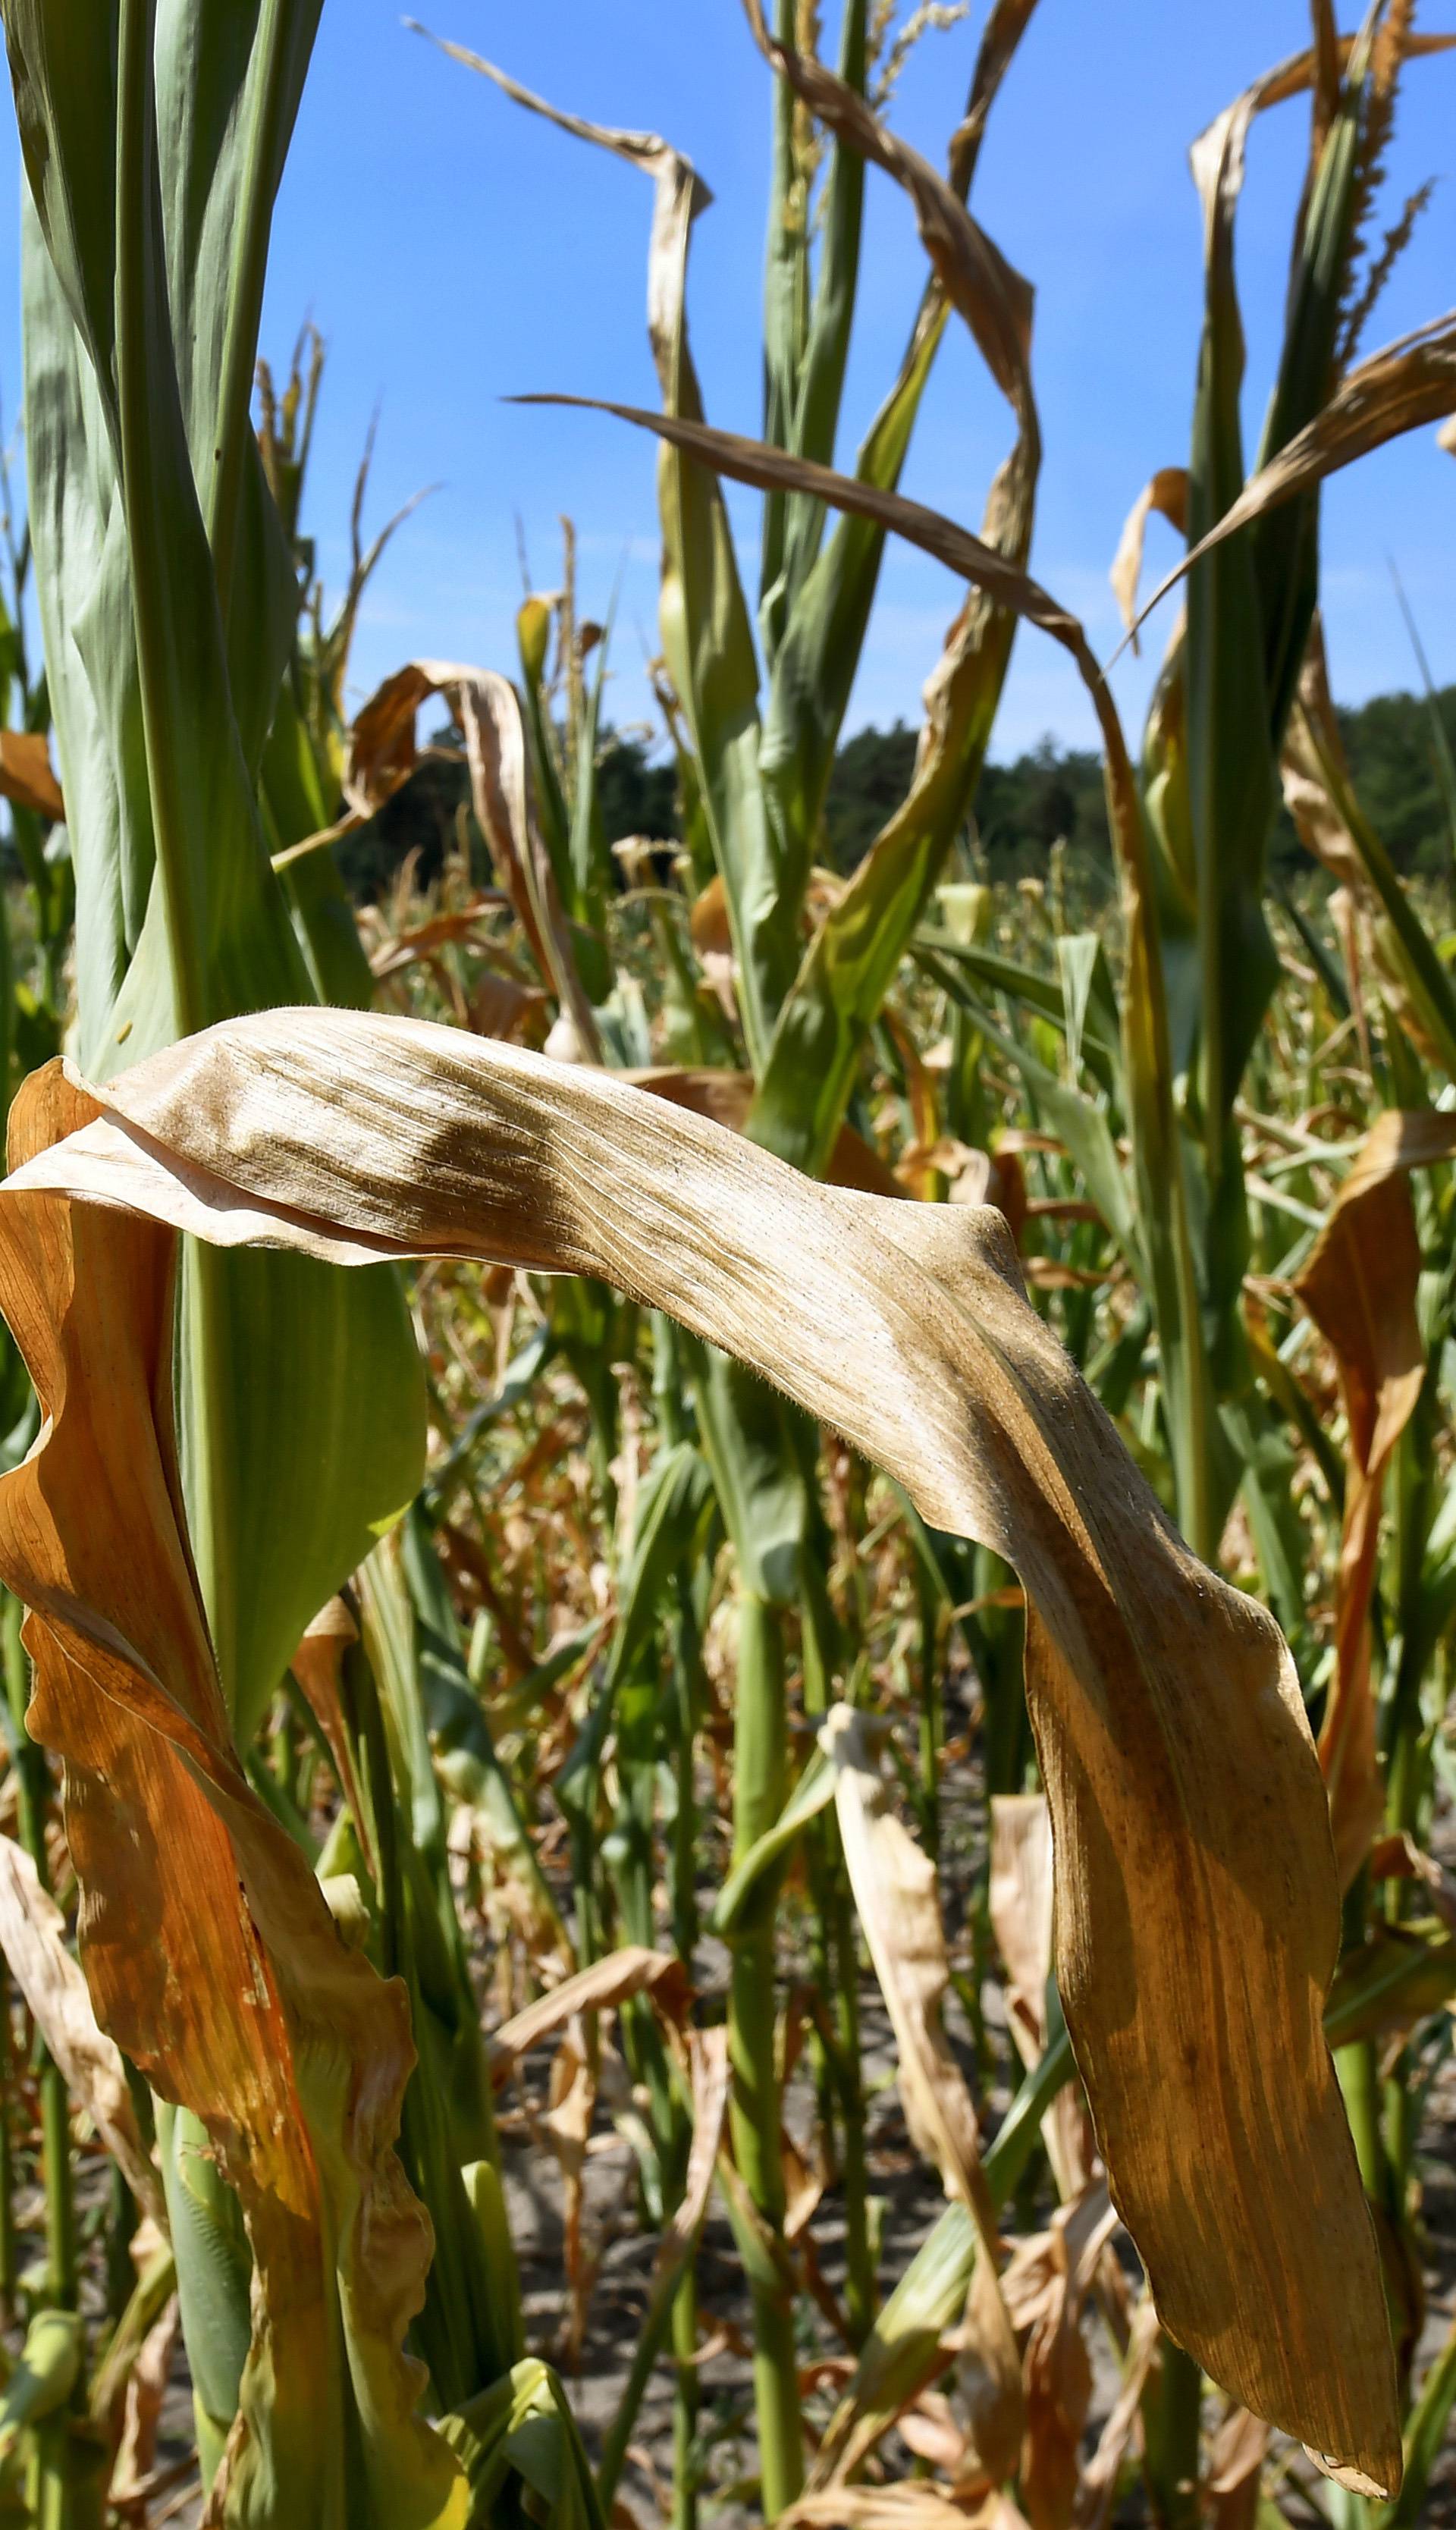 Maize plants damaged by heat